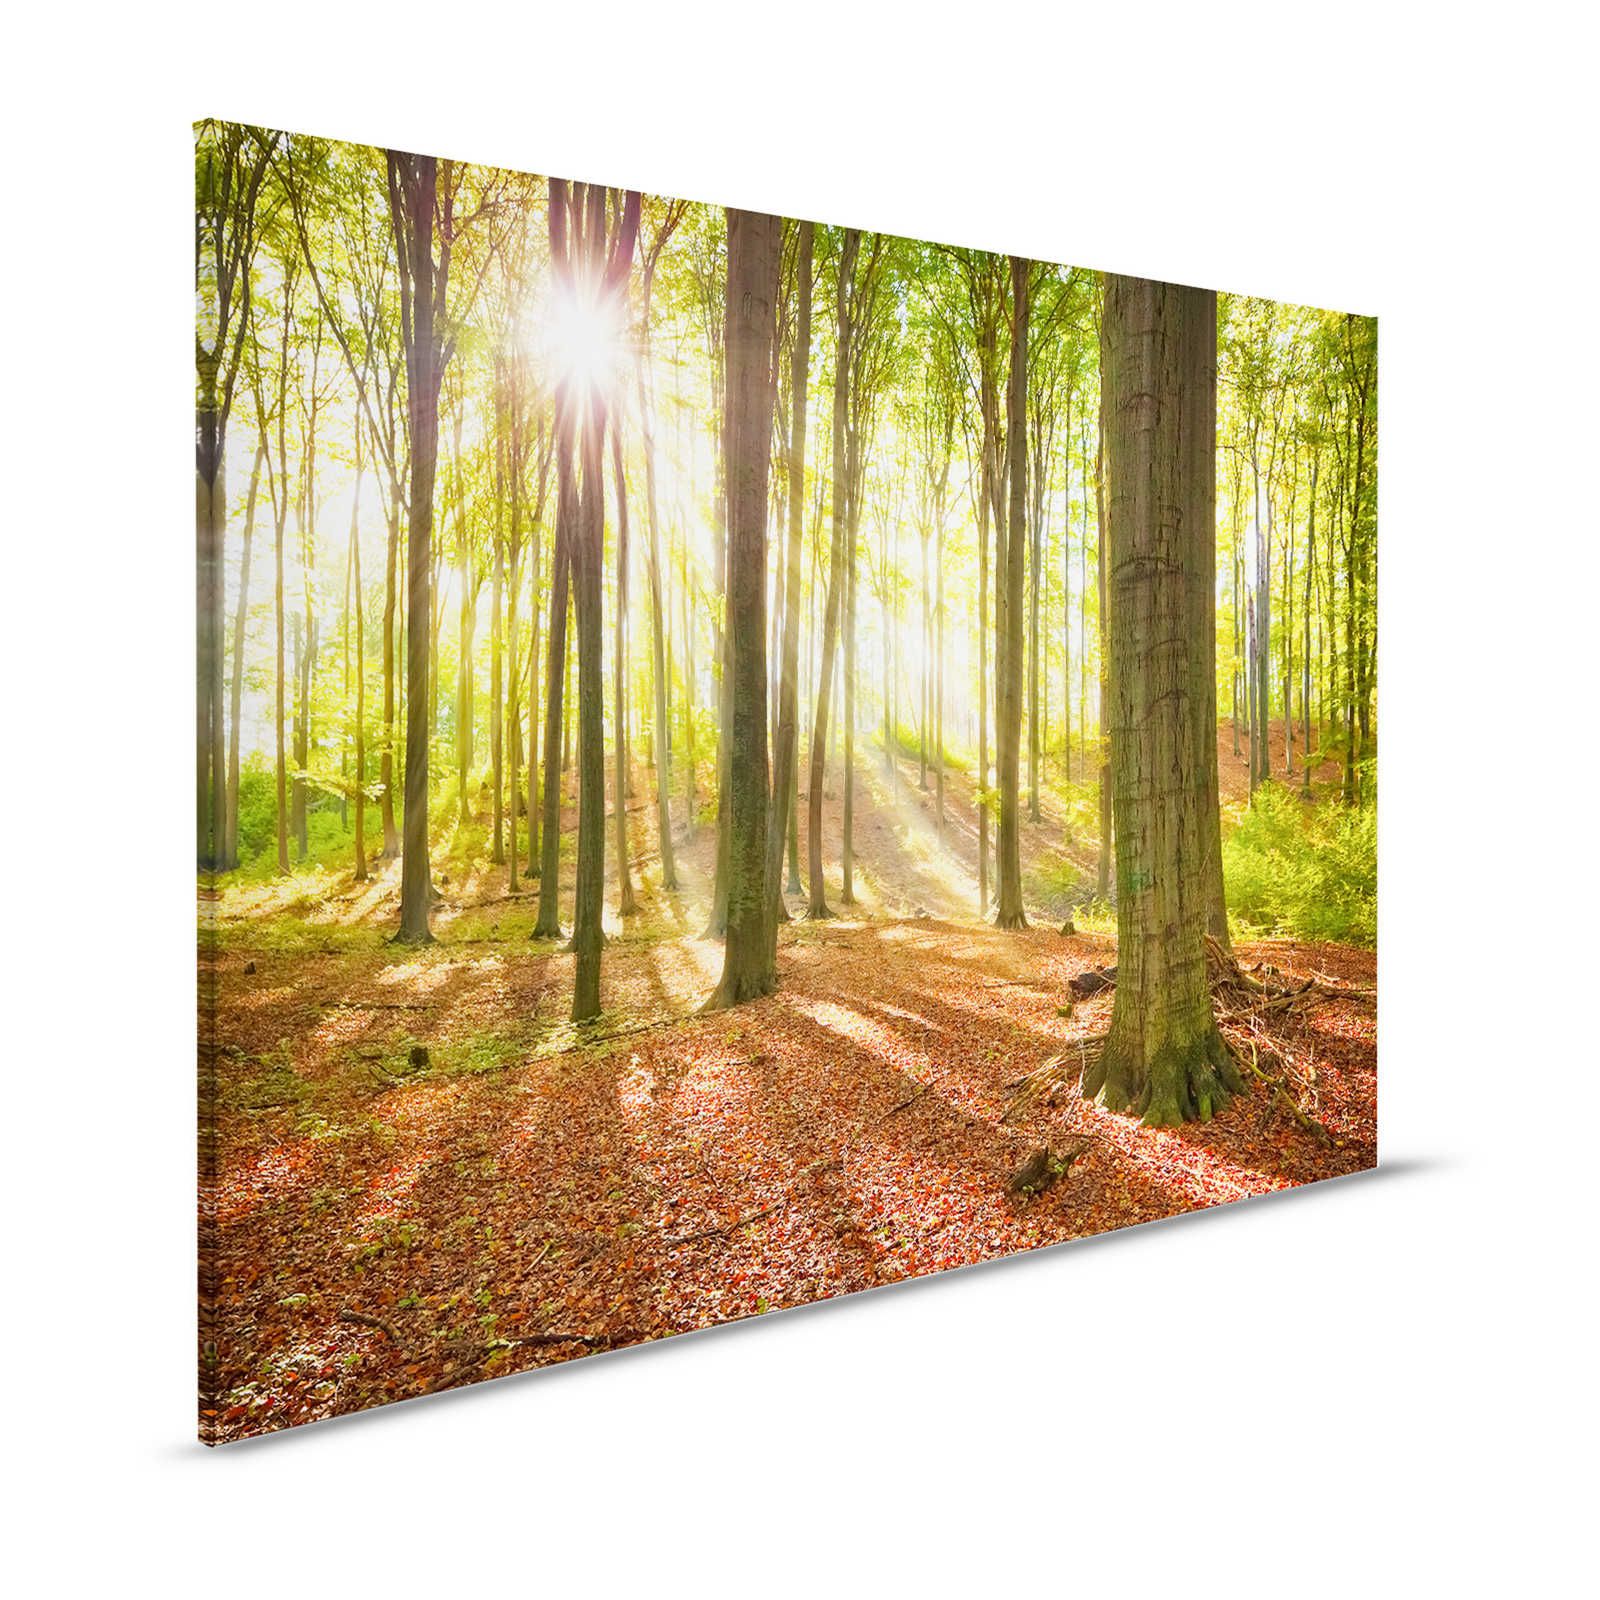 Cuadro Naturaleza Bosque caducifolio con rayos de luz - 1,20 m x 0,80 m
